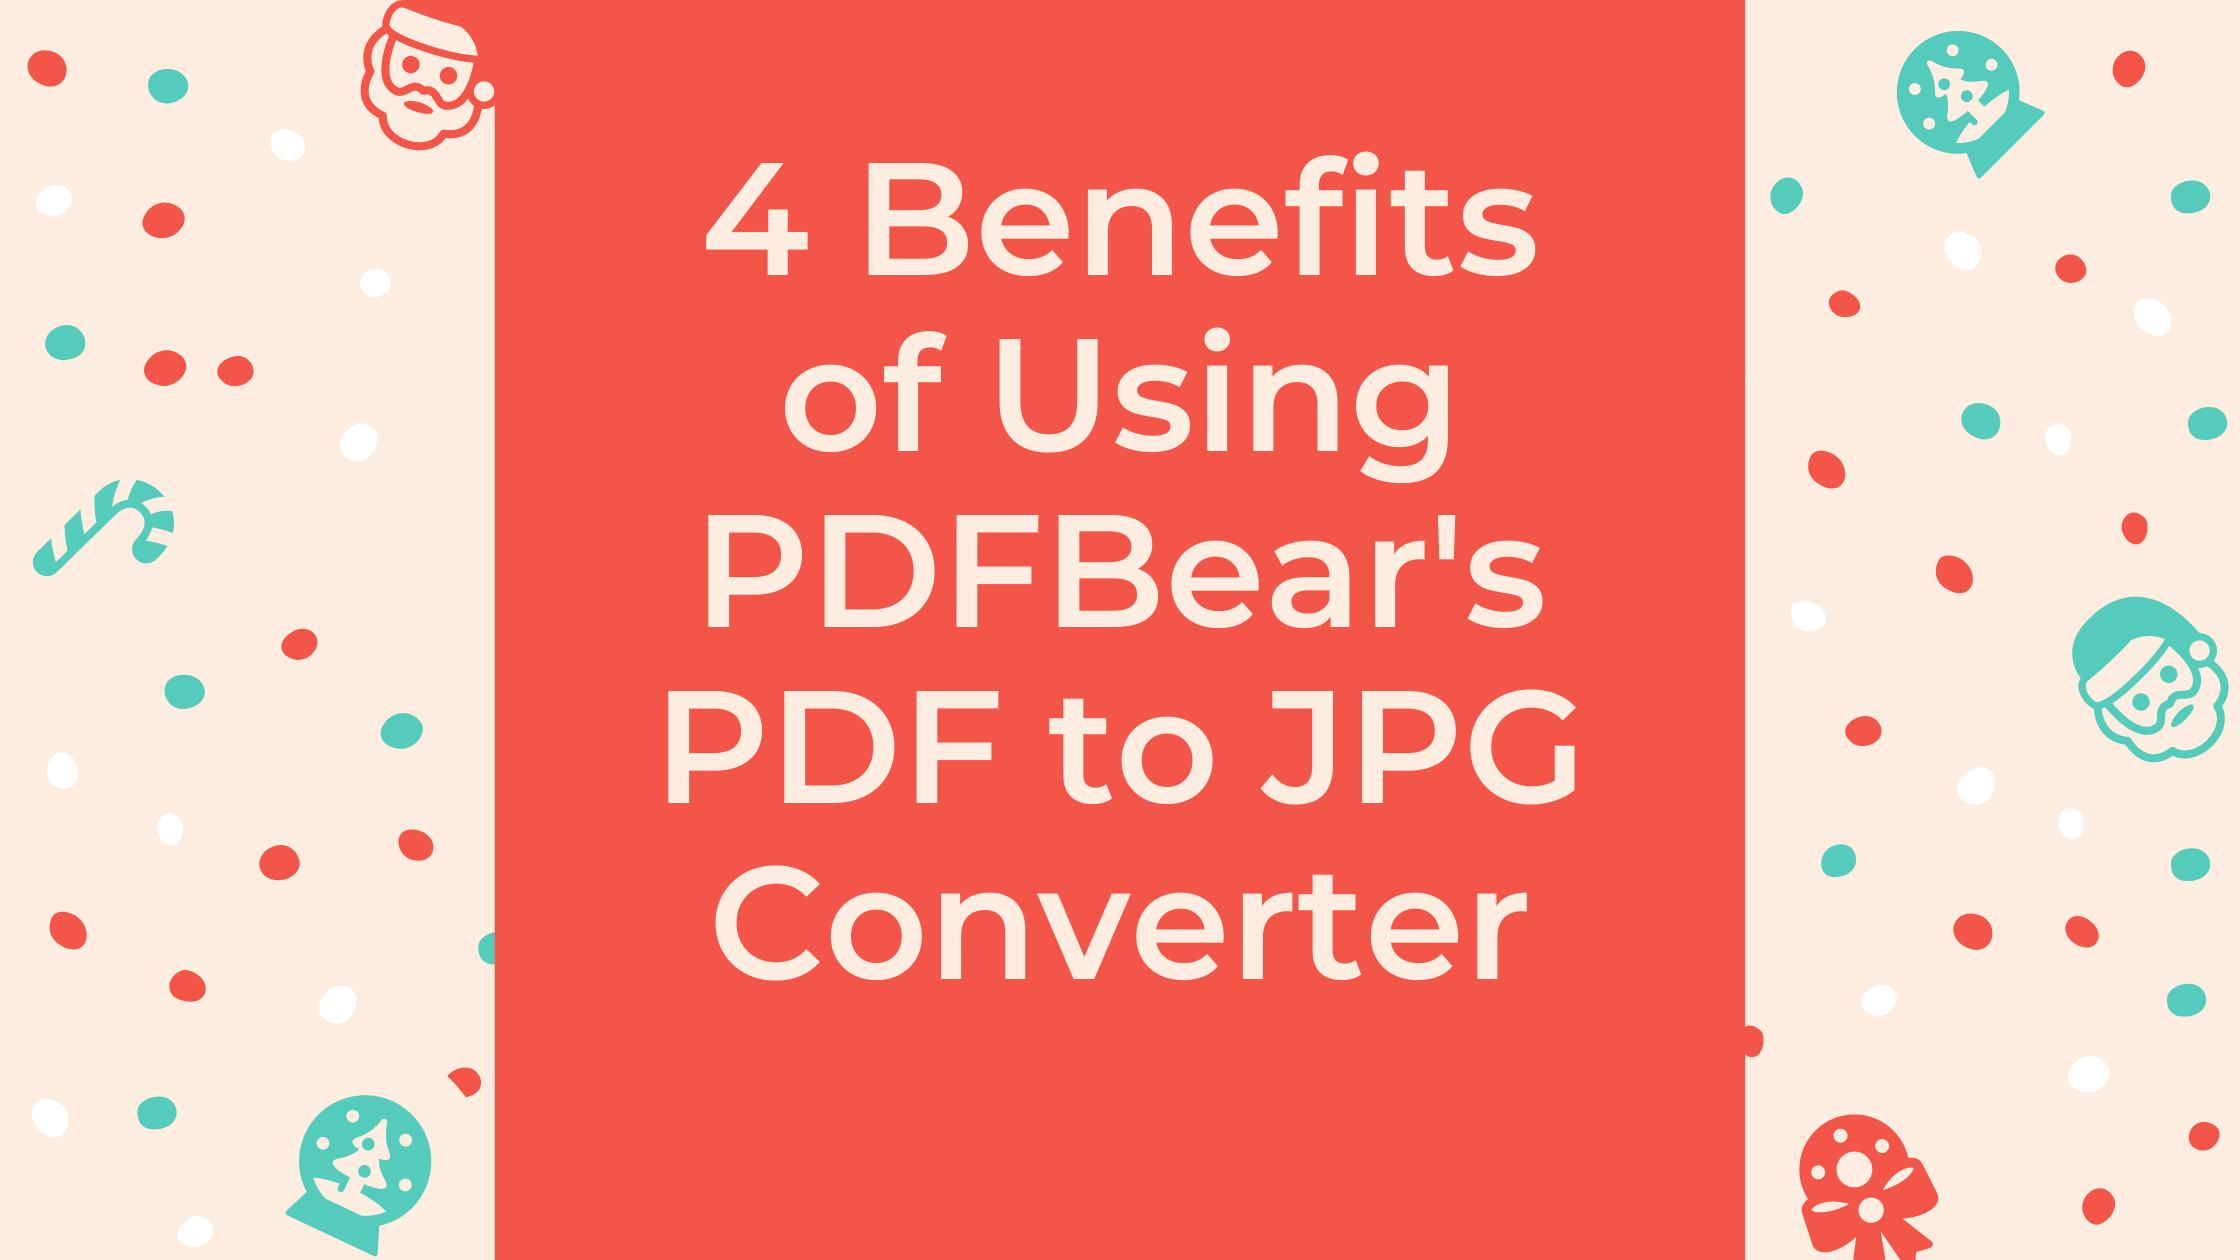 4 Benefits of Using PDFBear's PDF to JPG Converter